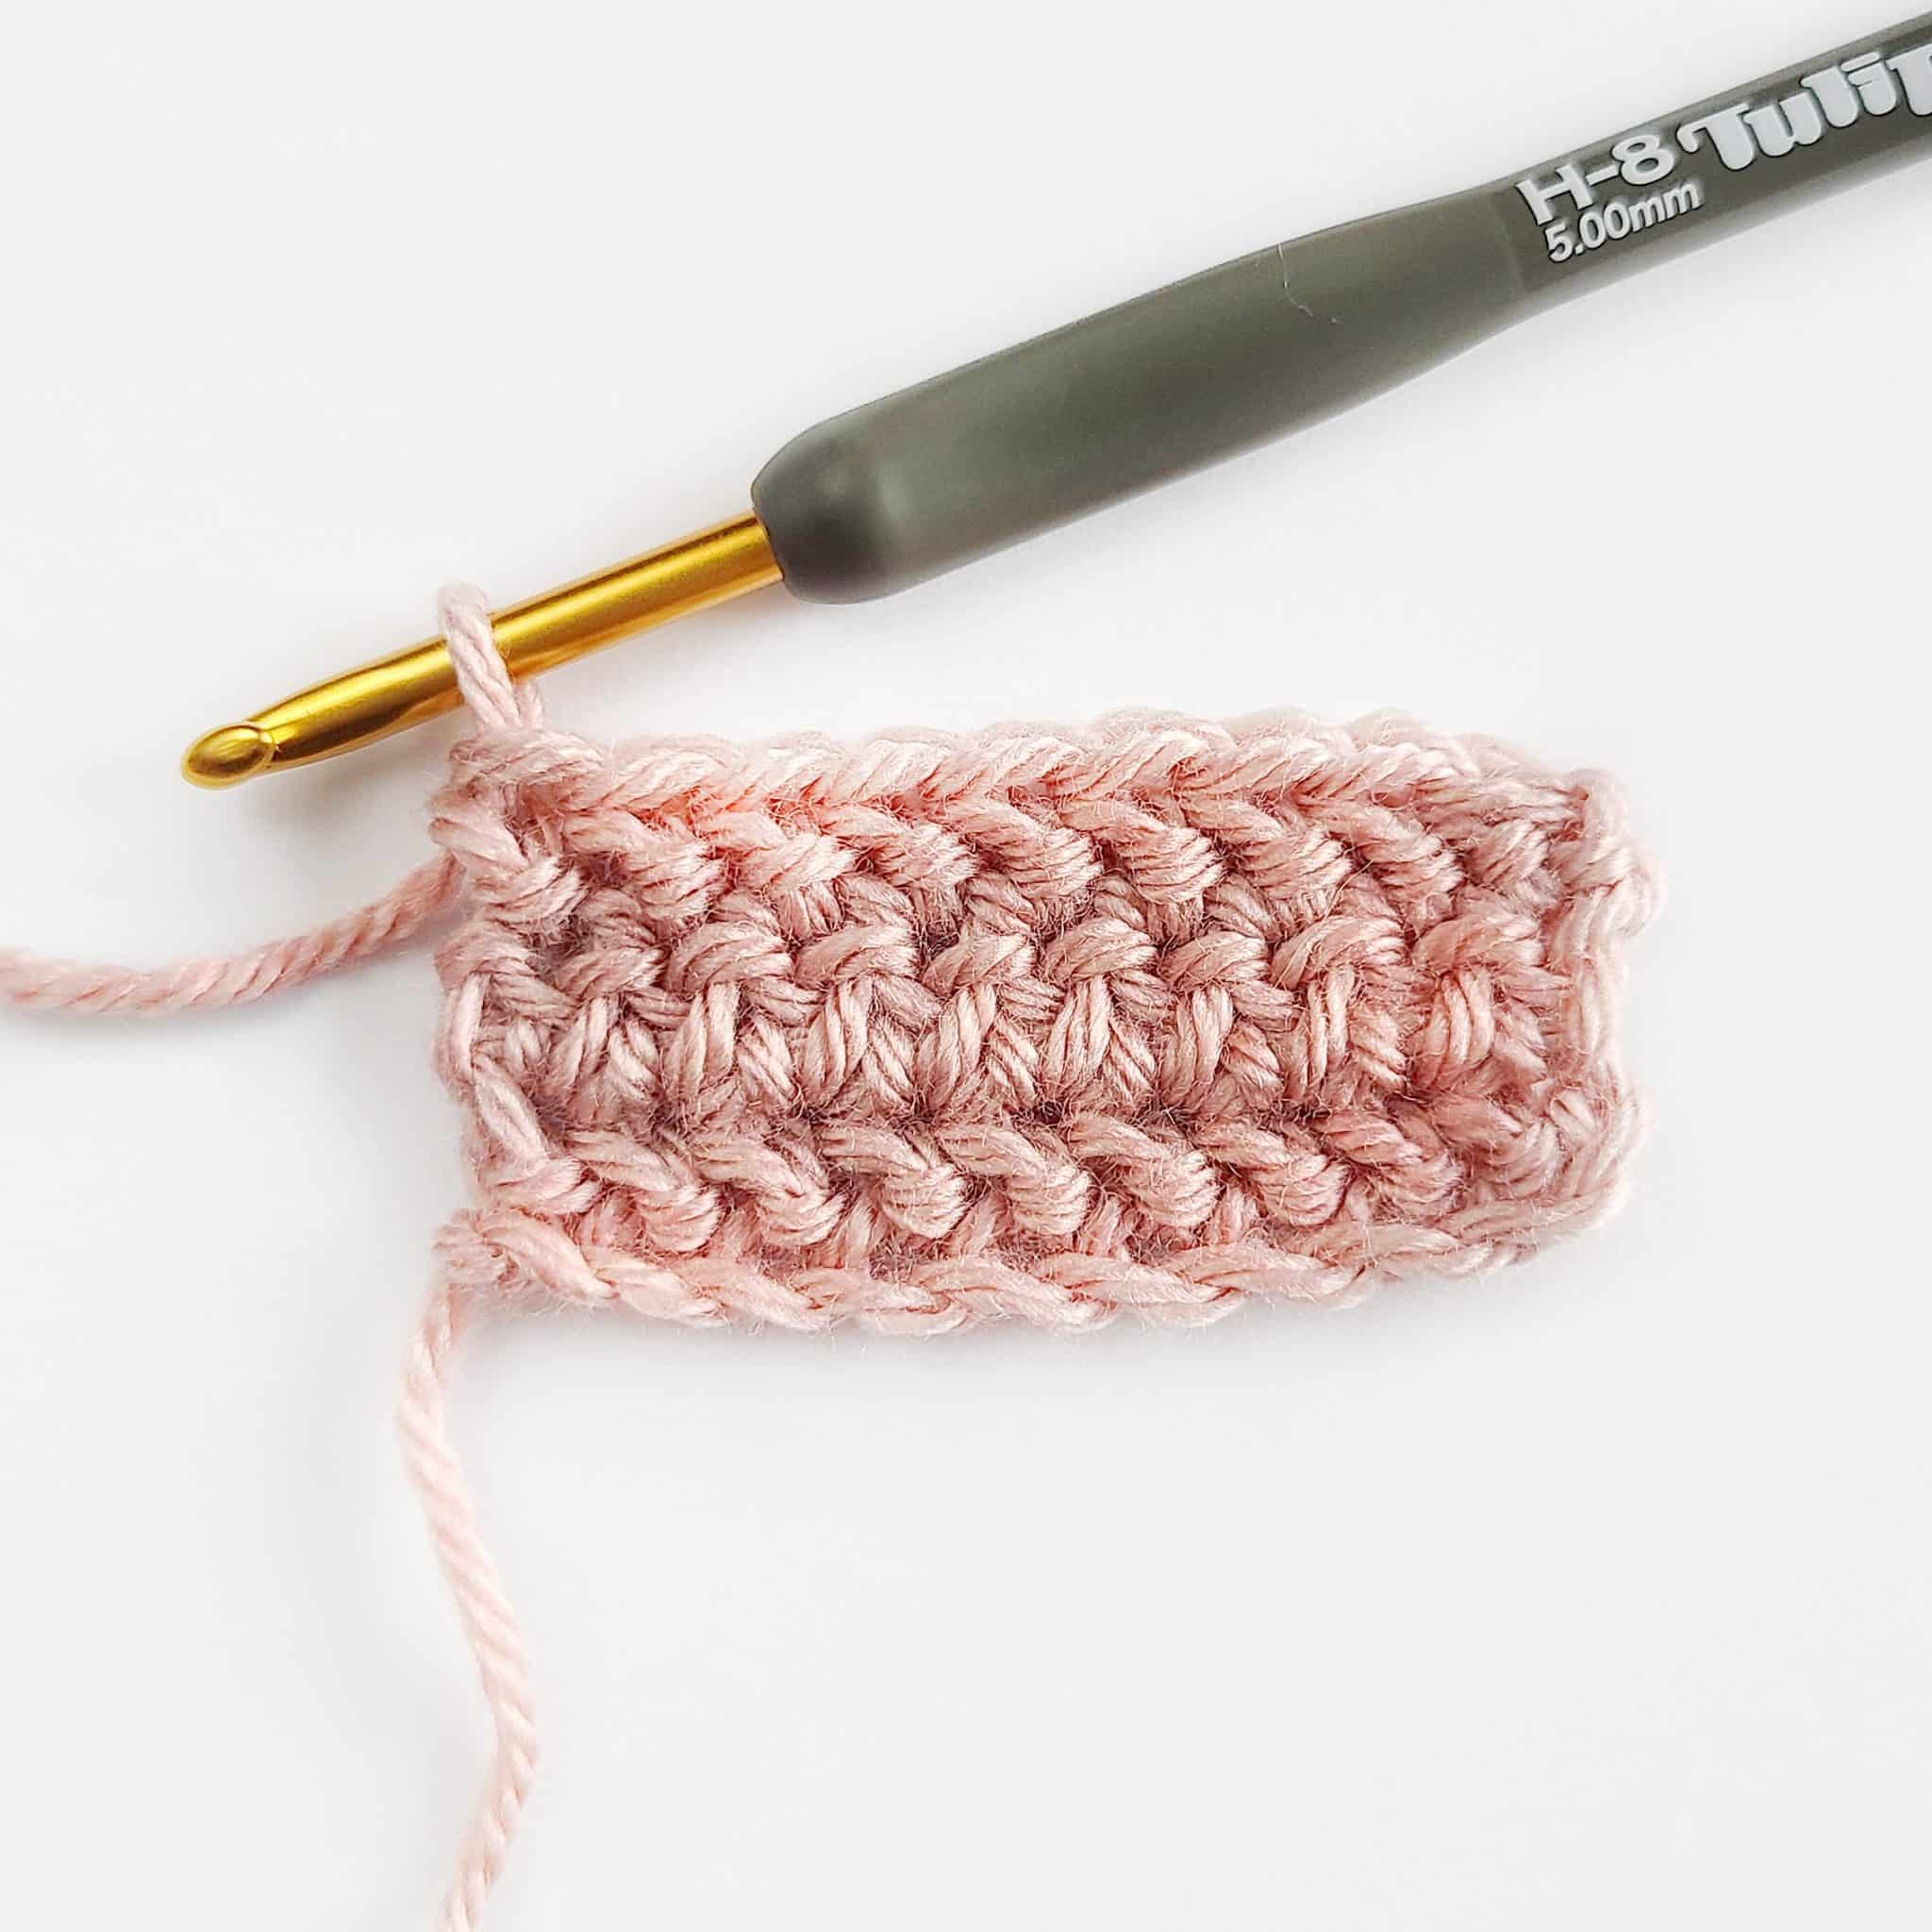 Crochet Hook - Size H/8 5.00mm, Crochet Turning Kits